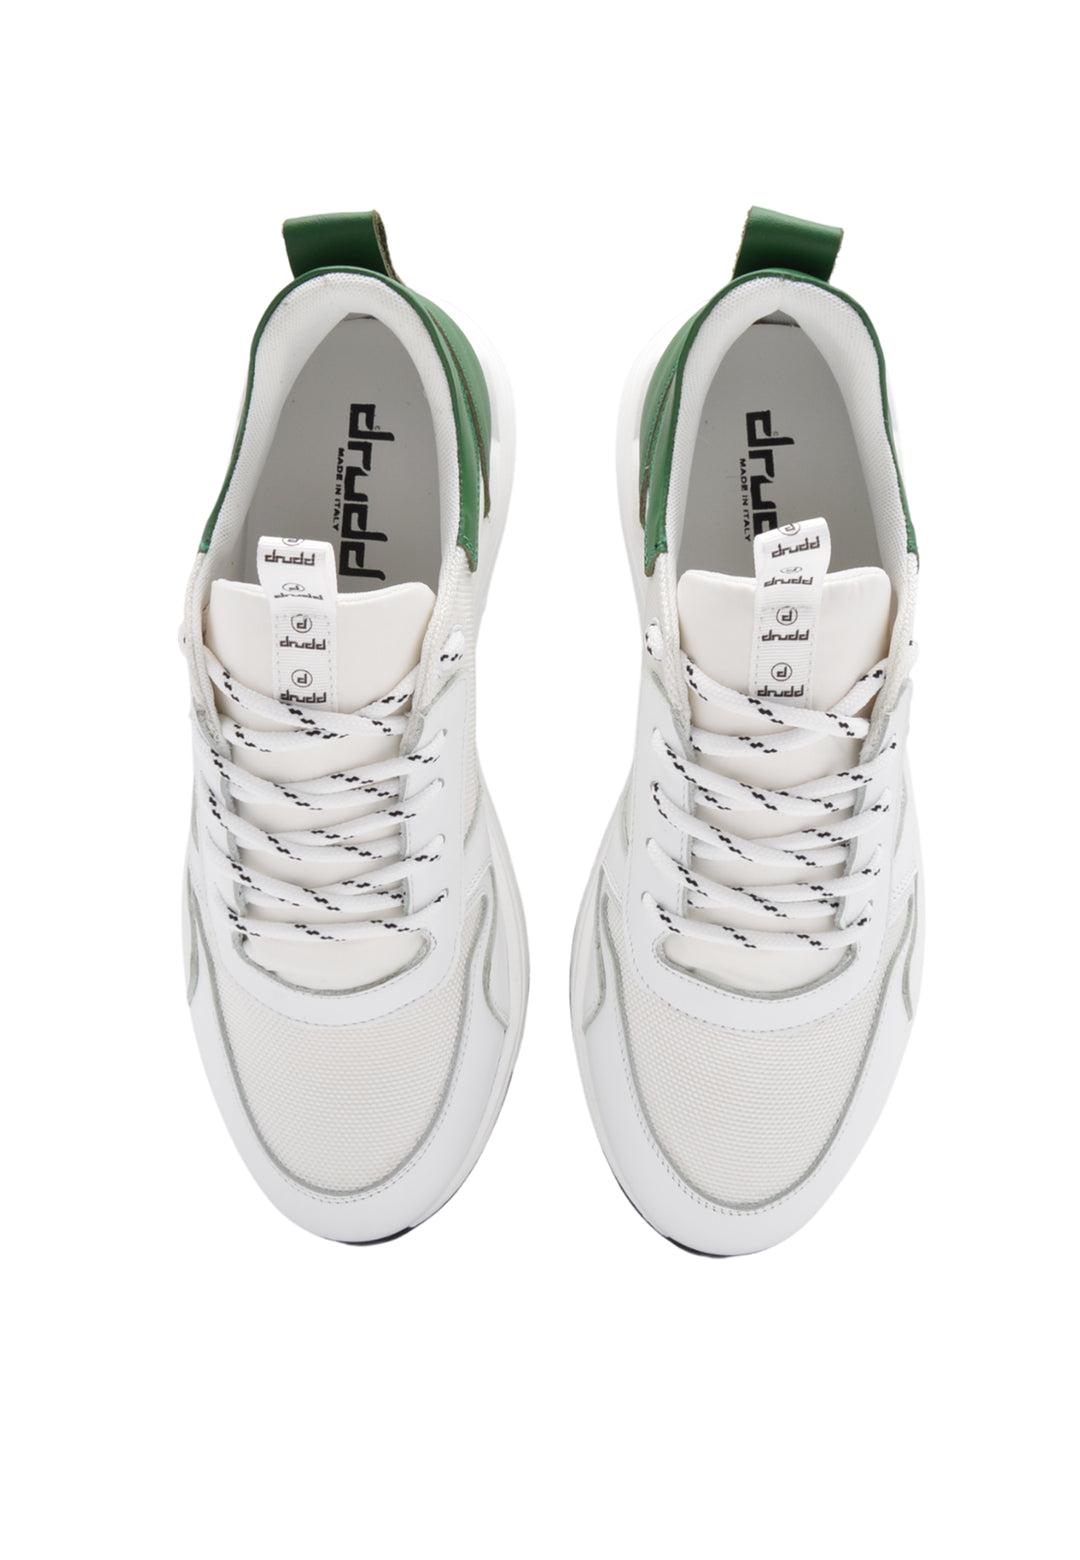 Sneakers Pelle e Tessuto Bianco Verde - DR4